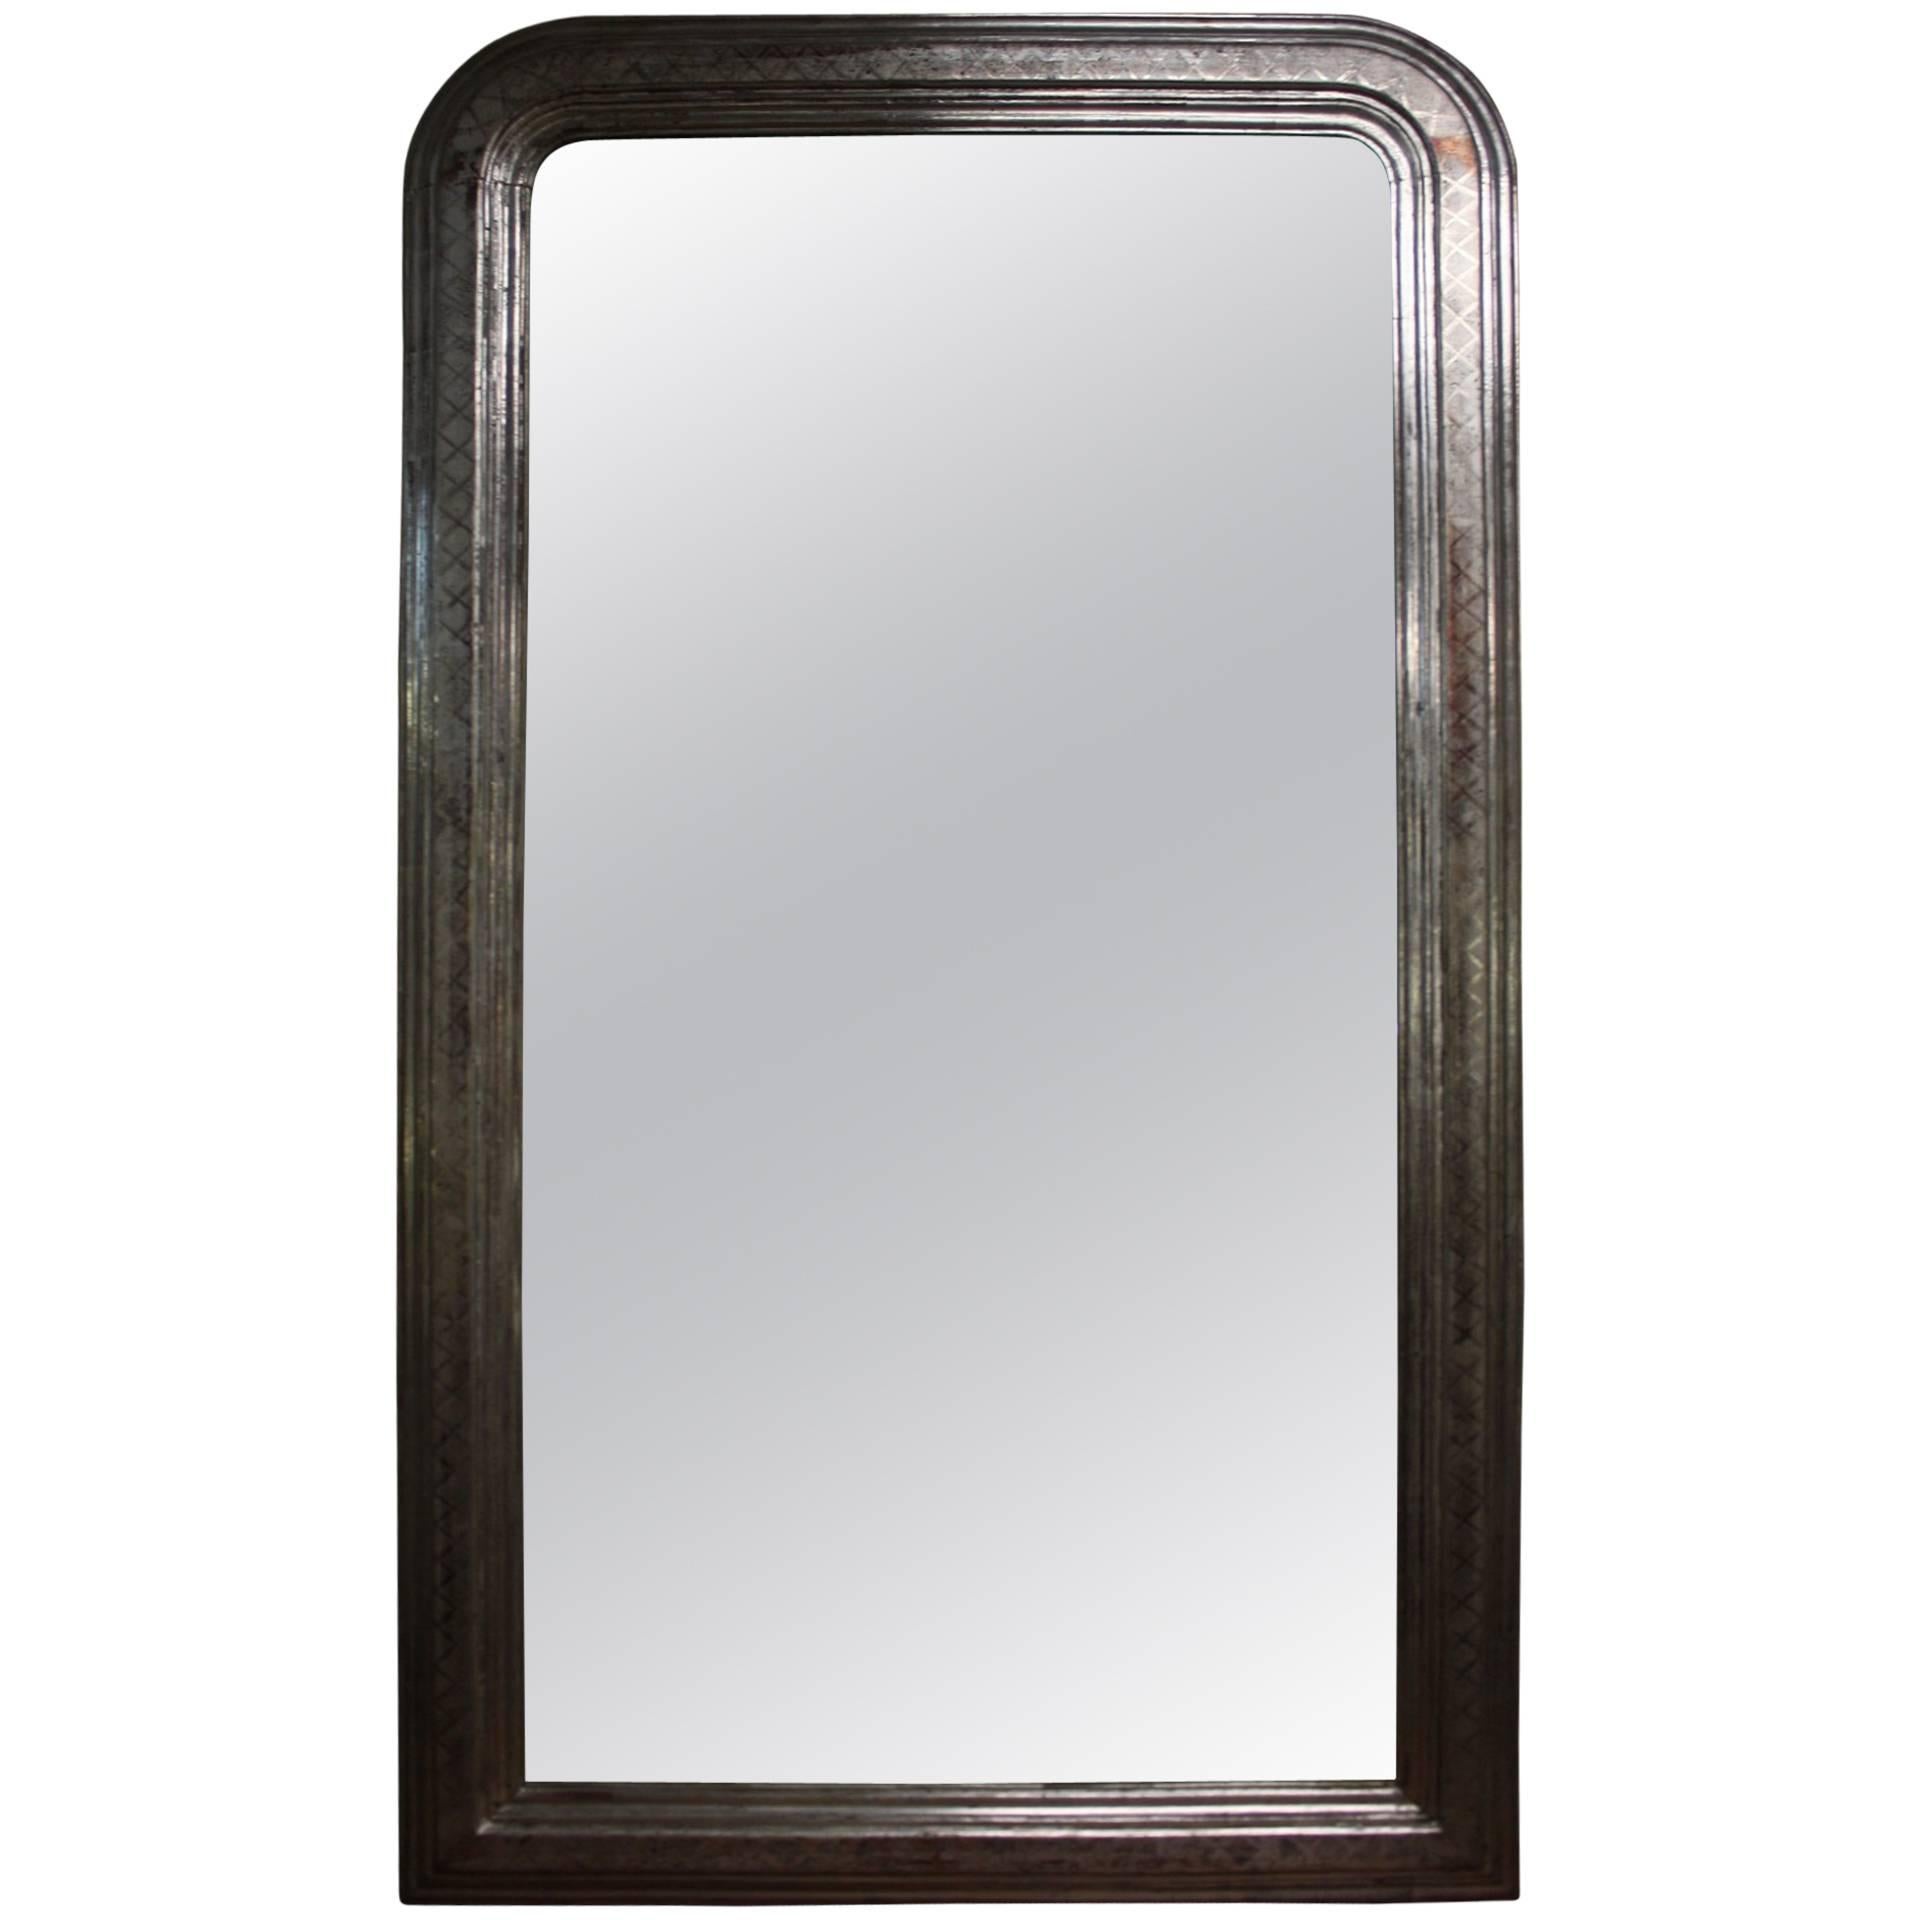 19th Century Louis Philippe Silver Gilt Mirror, France